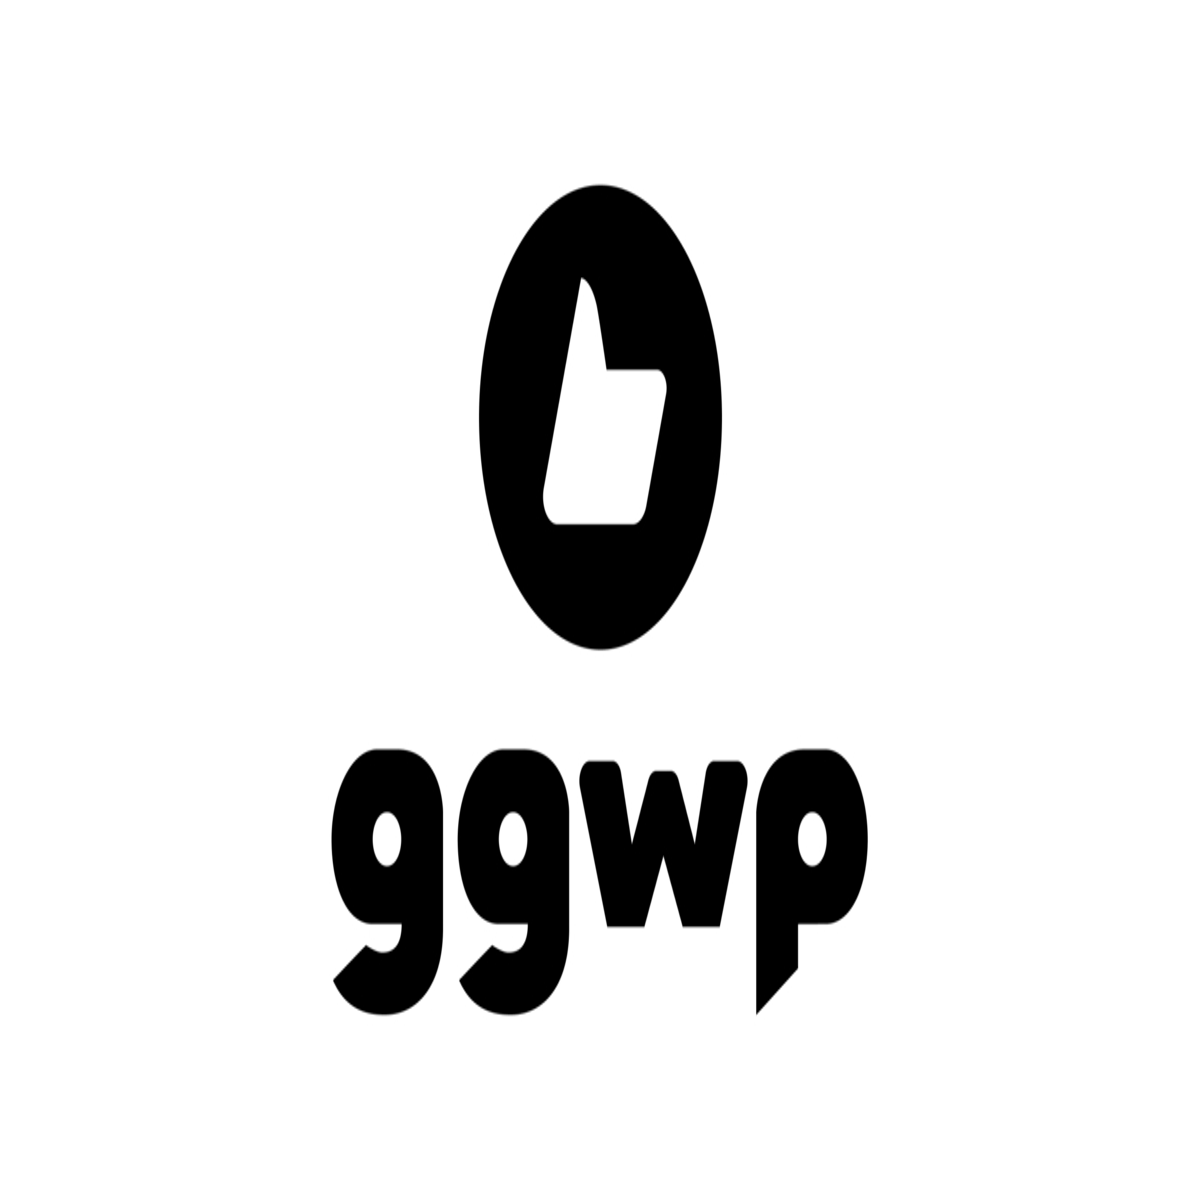 File:Ggwp logo.png - Wikimedia Commons